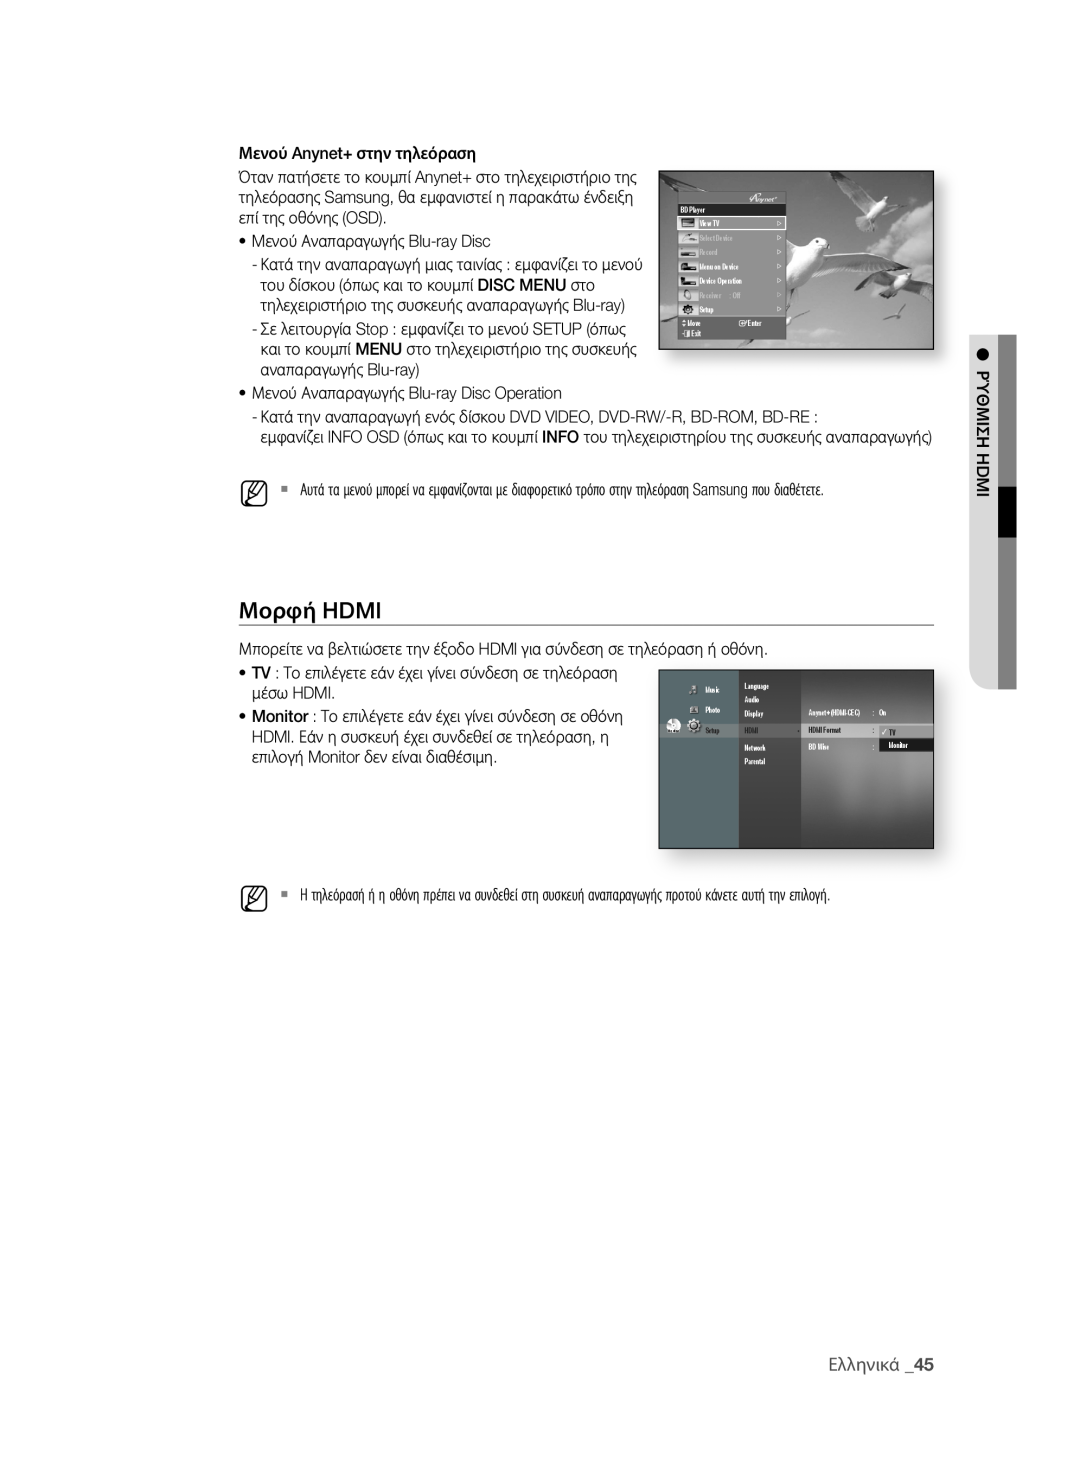 Samsung BD-P1580/EDC manual Μορφή HDMI, Ελληνικά , μέσω HDMI, HDMI. Εάν η συσκευή έχει συνδεθεί σε τηλεόραση, η 